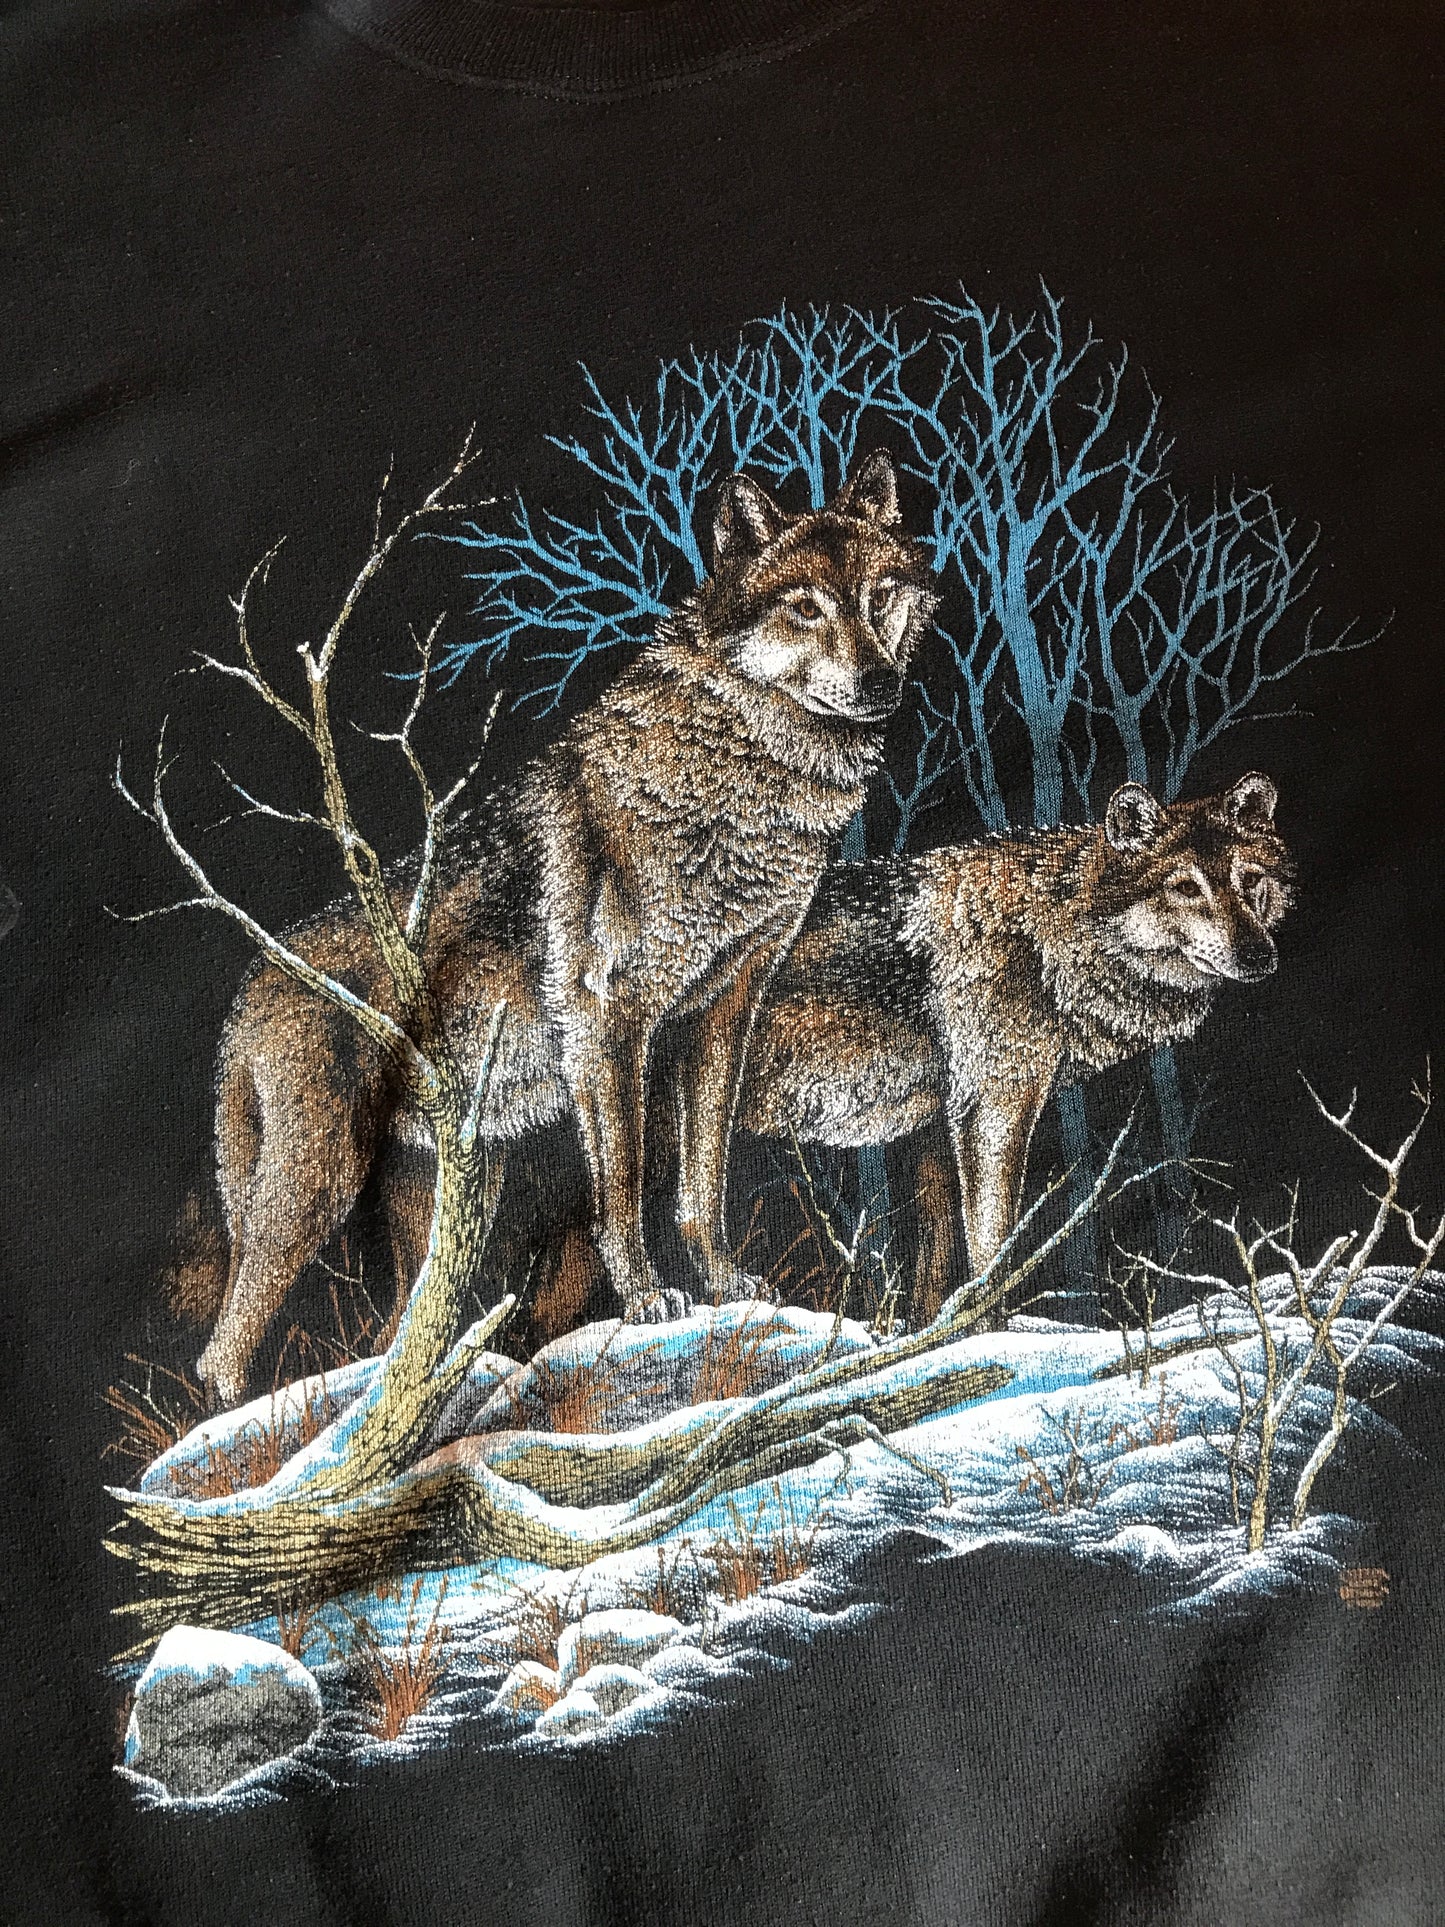 Vintage Wolves Sweatshirt